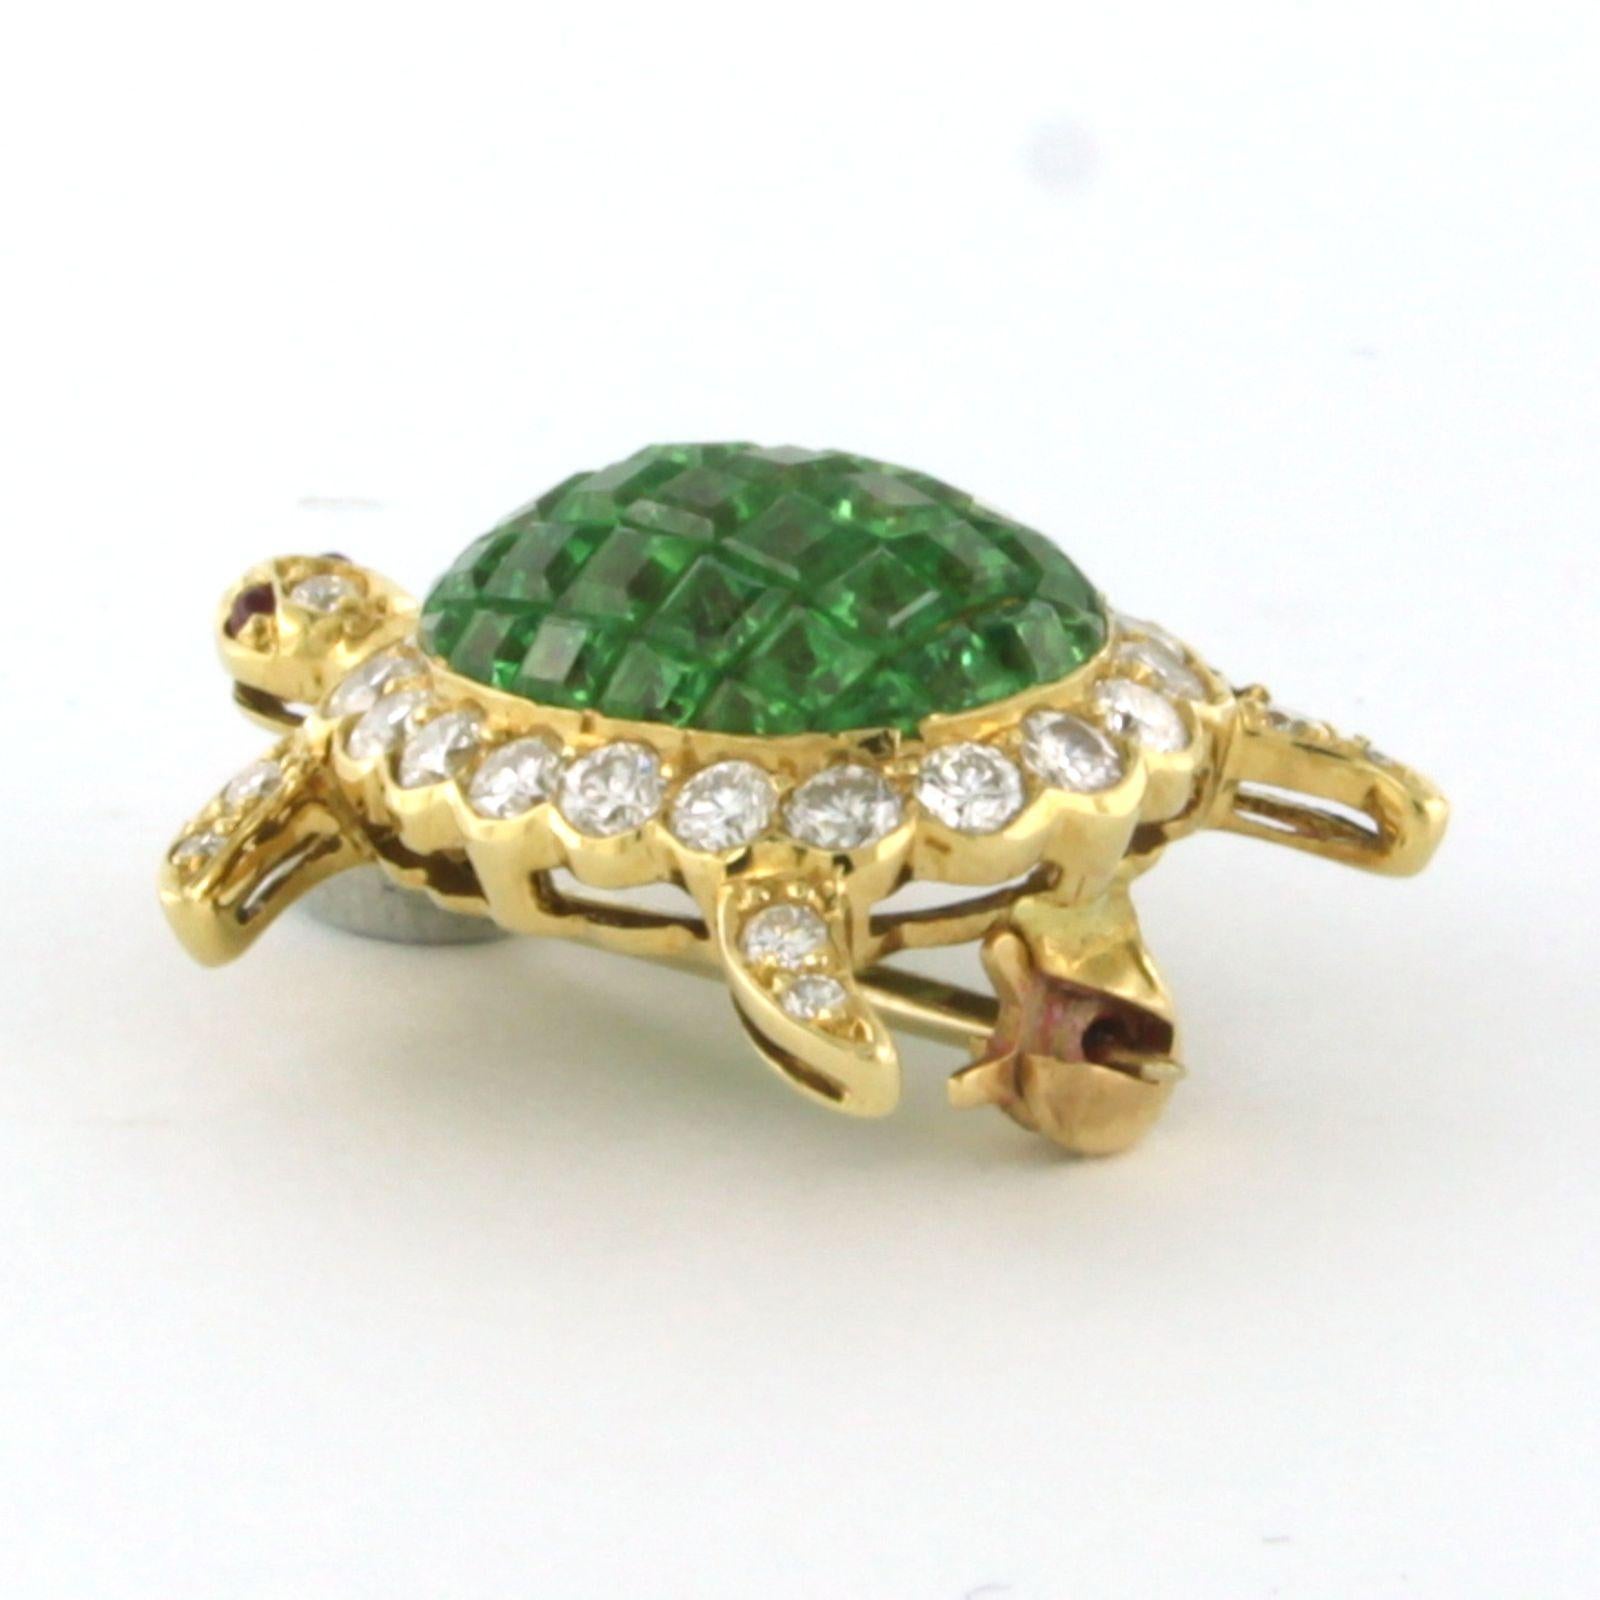 Princess Cut Brooch shape of Turtle with peridot and diamonds 18k yellow gold